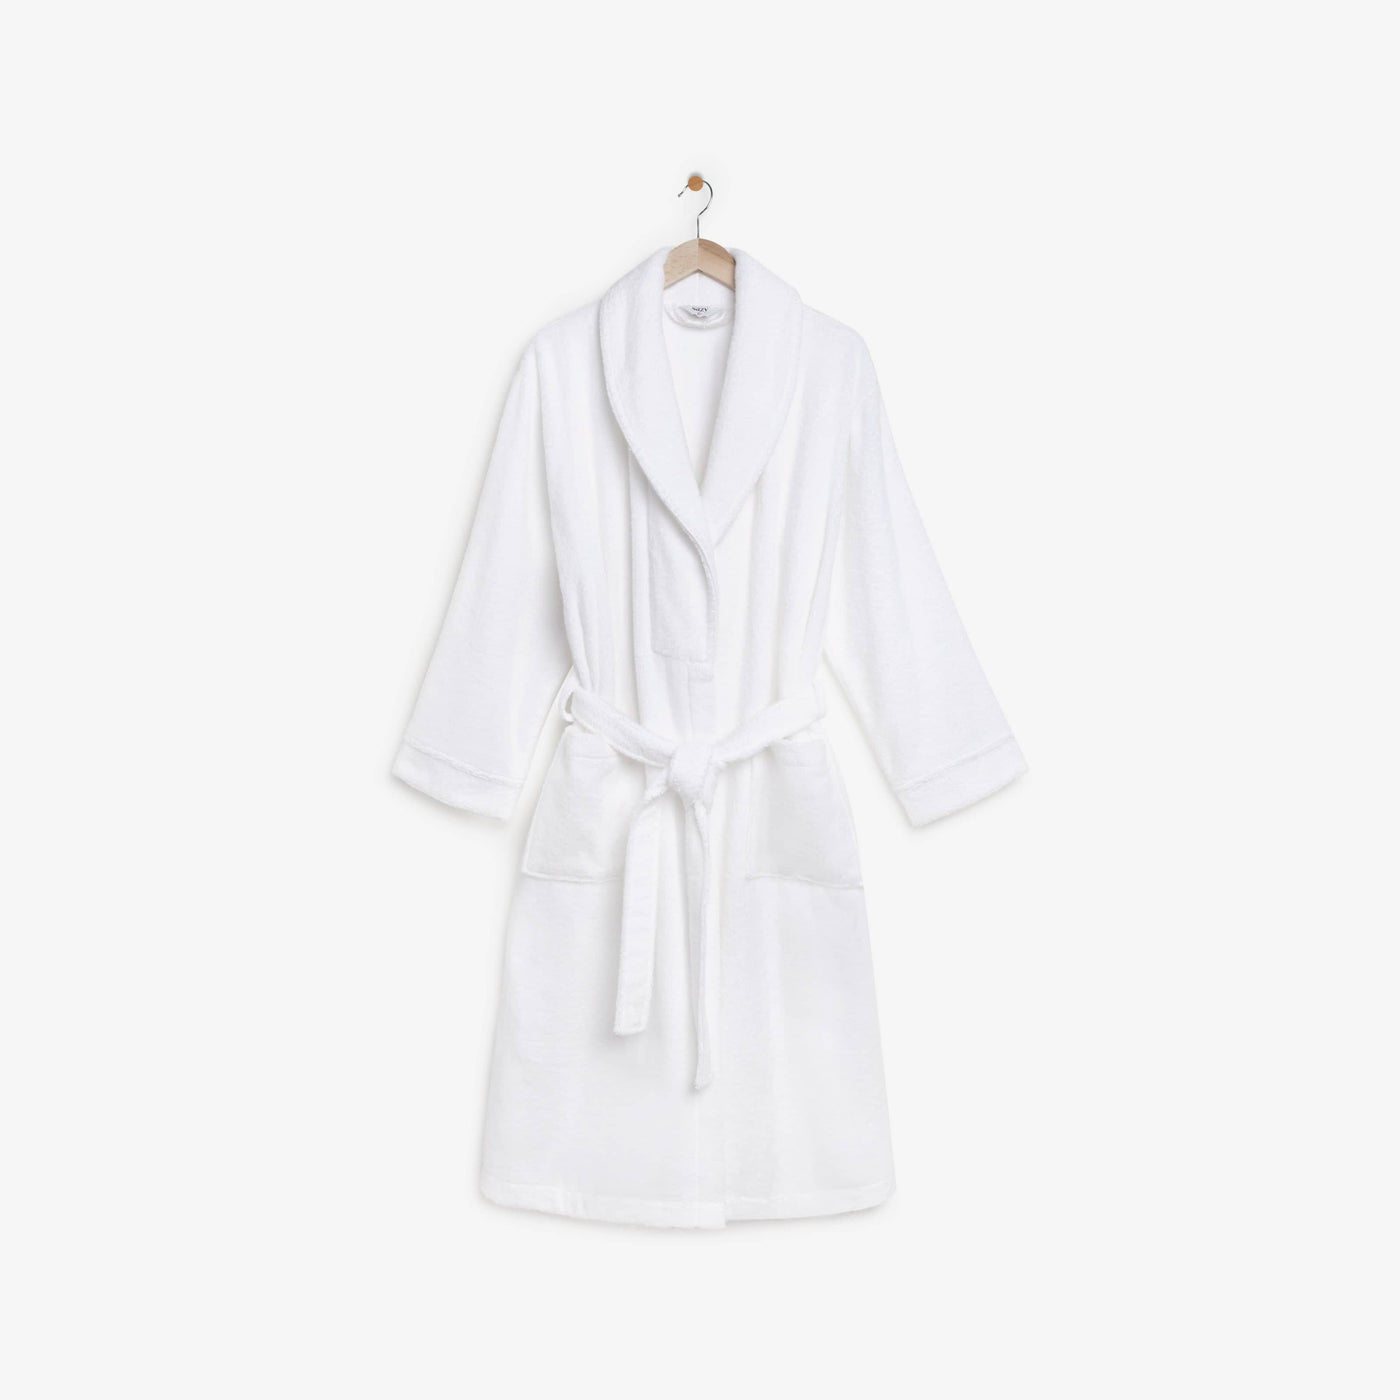 Rupert Aqua Fibro Extra Soft 100% Turkish Cotton Men's Dressing Gown, White, S Dressing Gowns sazy.com